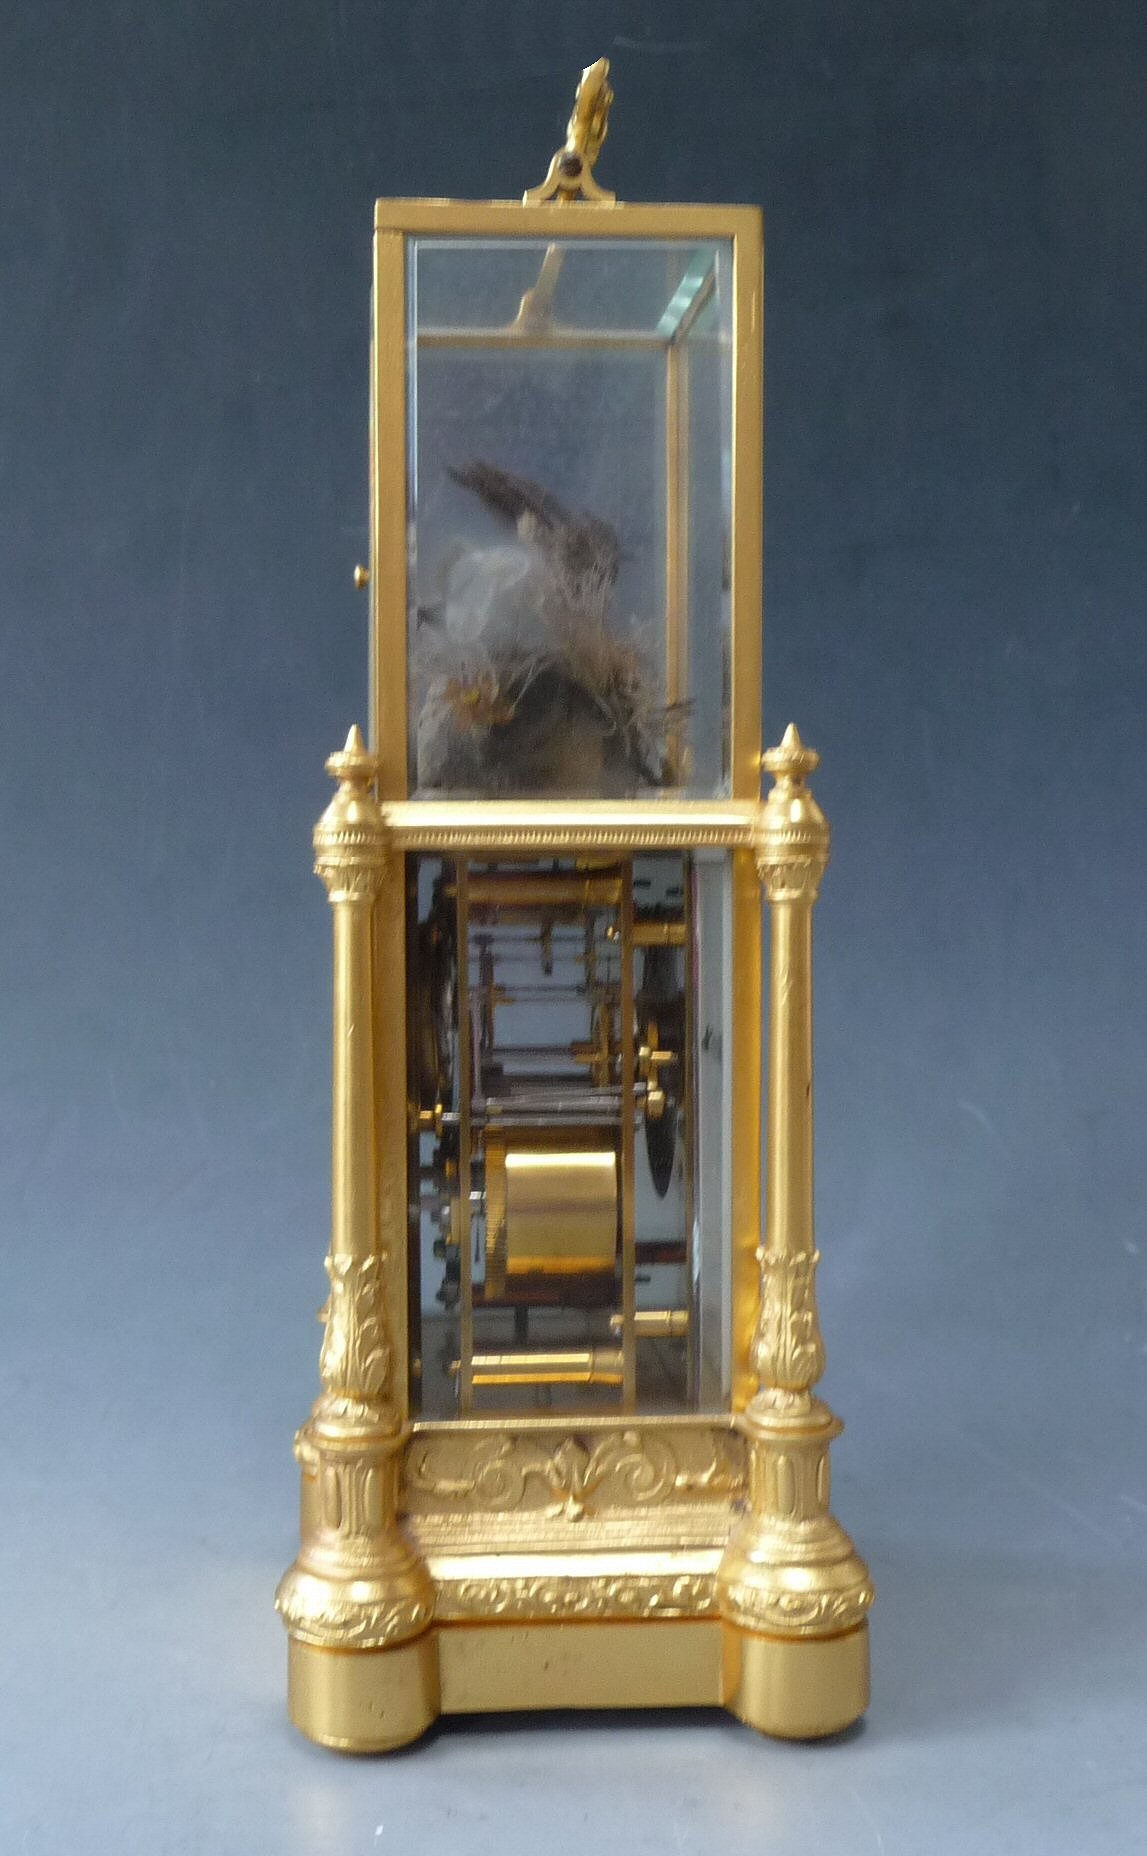 A rare French 'singing bird' automata carriage clock, striking, circa 1850.